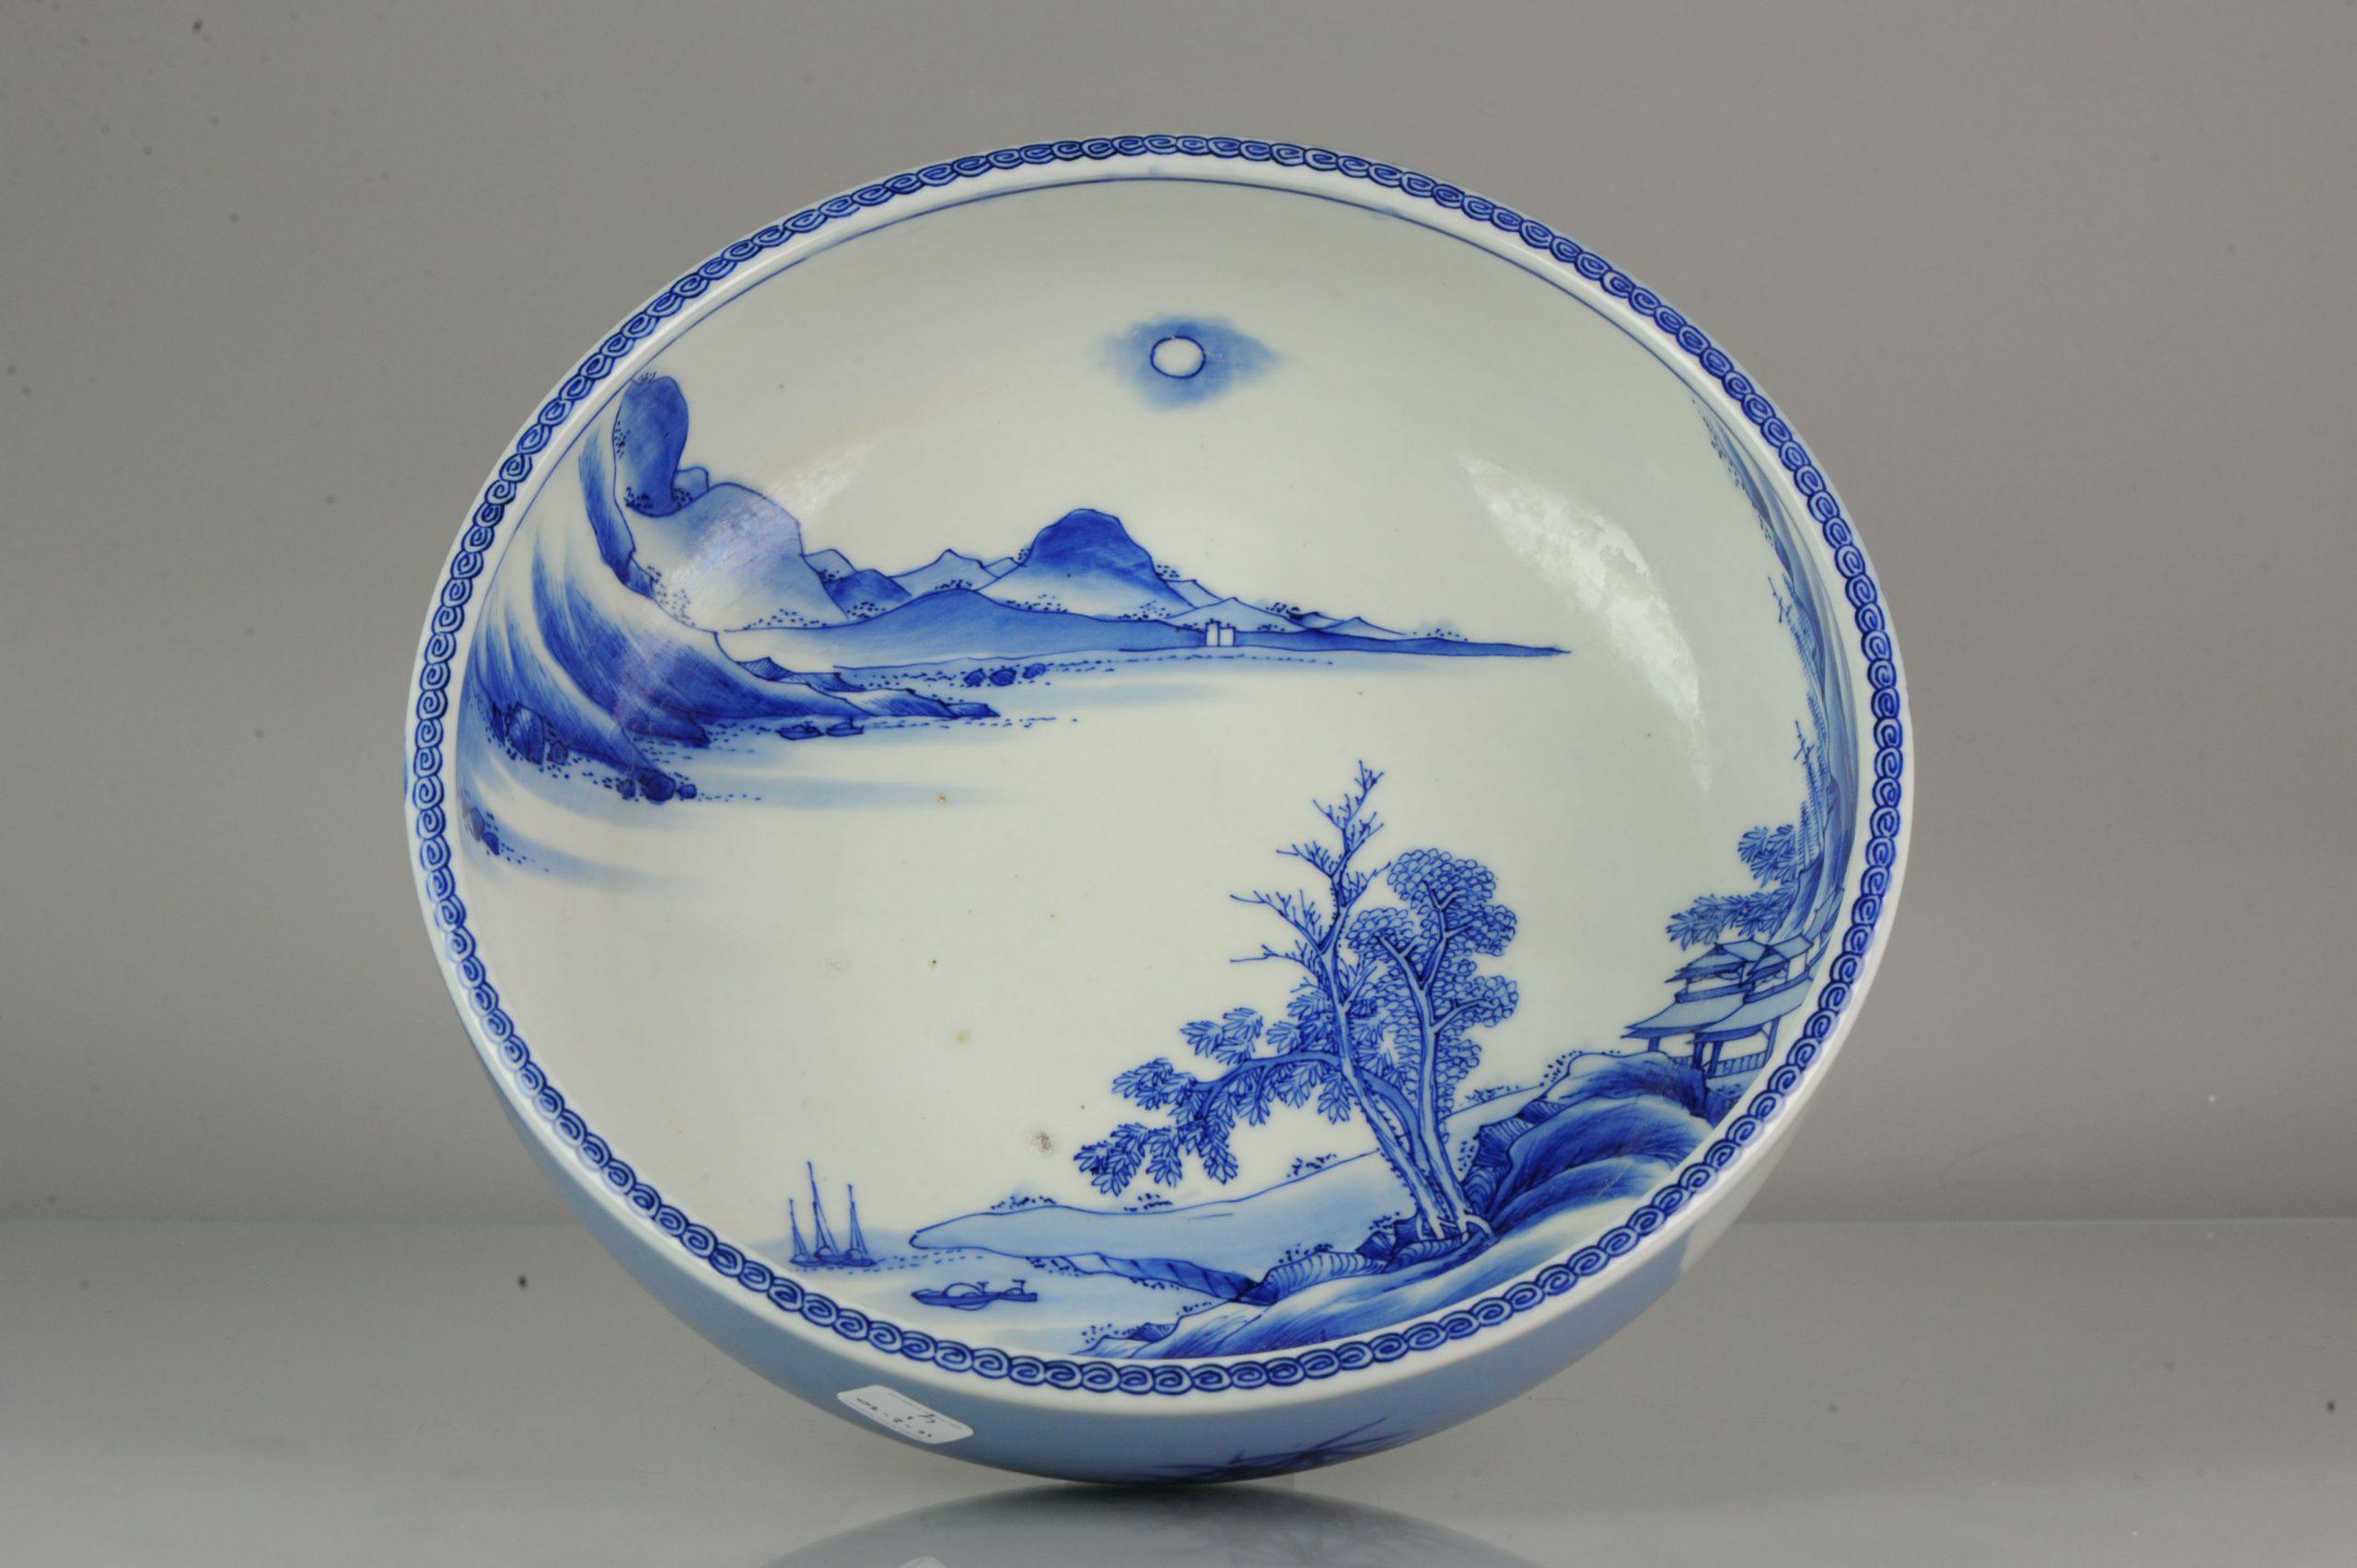 Large Arita Bowl Beautifull Japanese Porcelain 19th Century Edo/Meiji Period For Sale 2